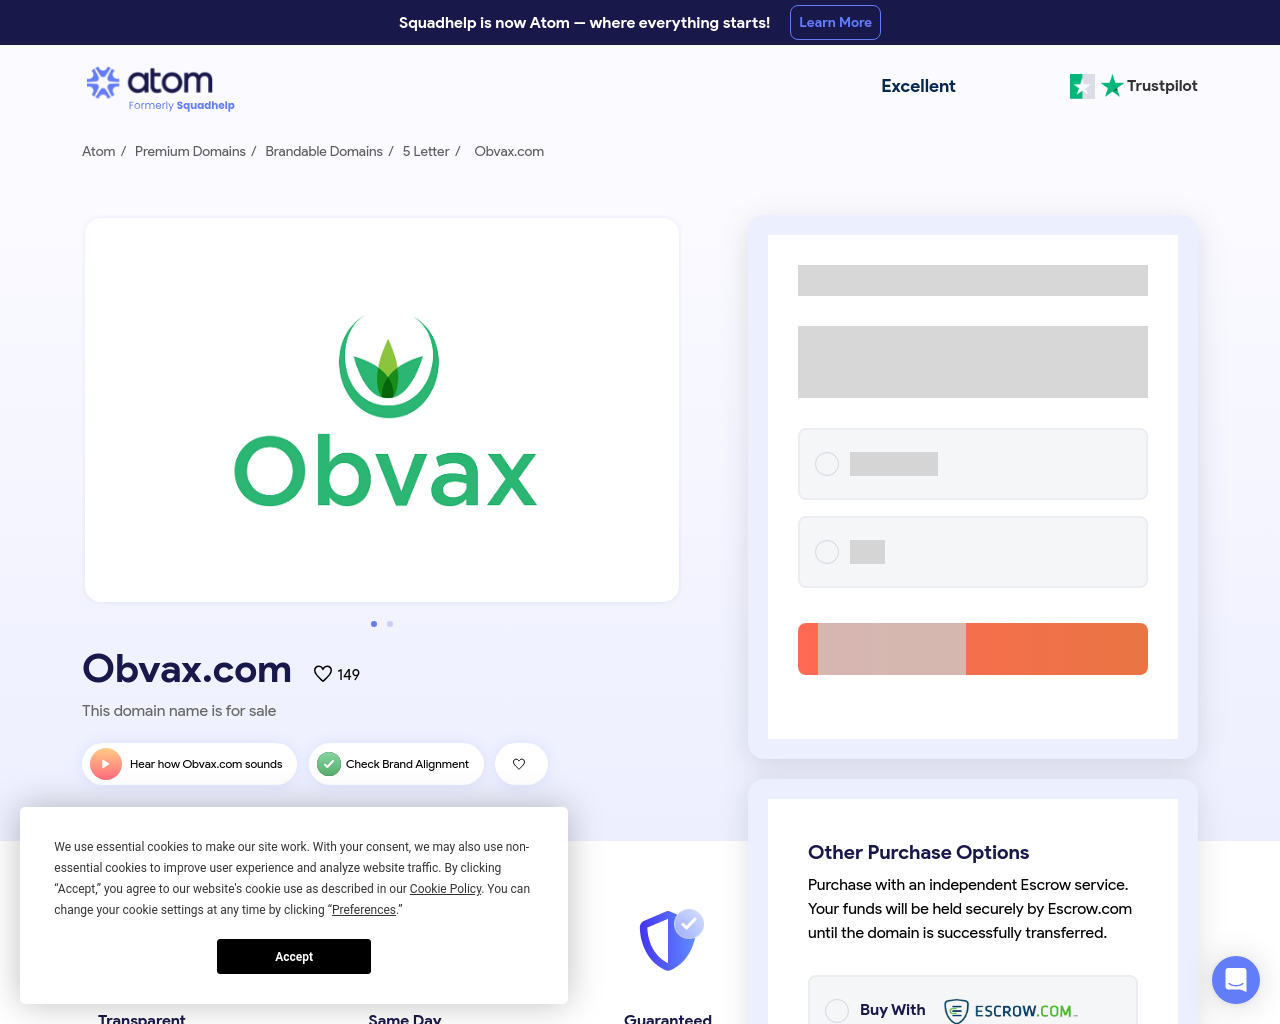 obvax.com